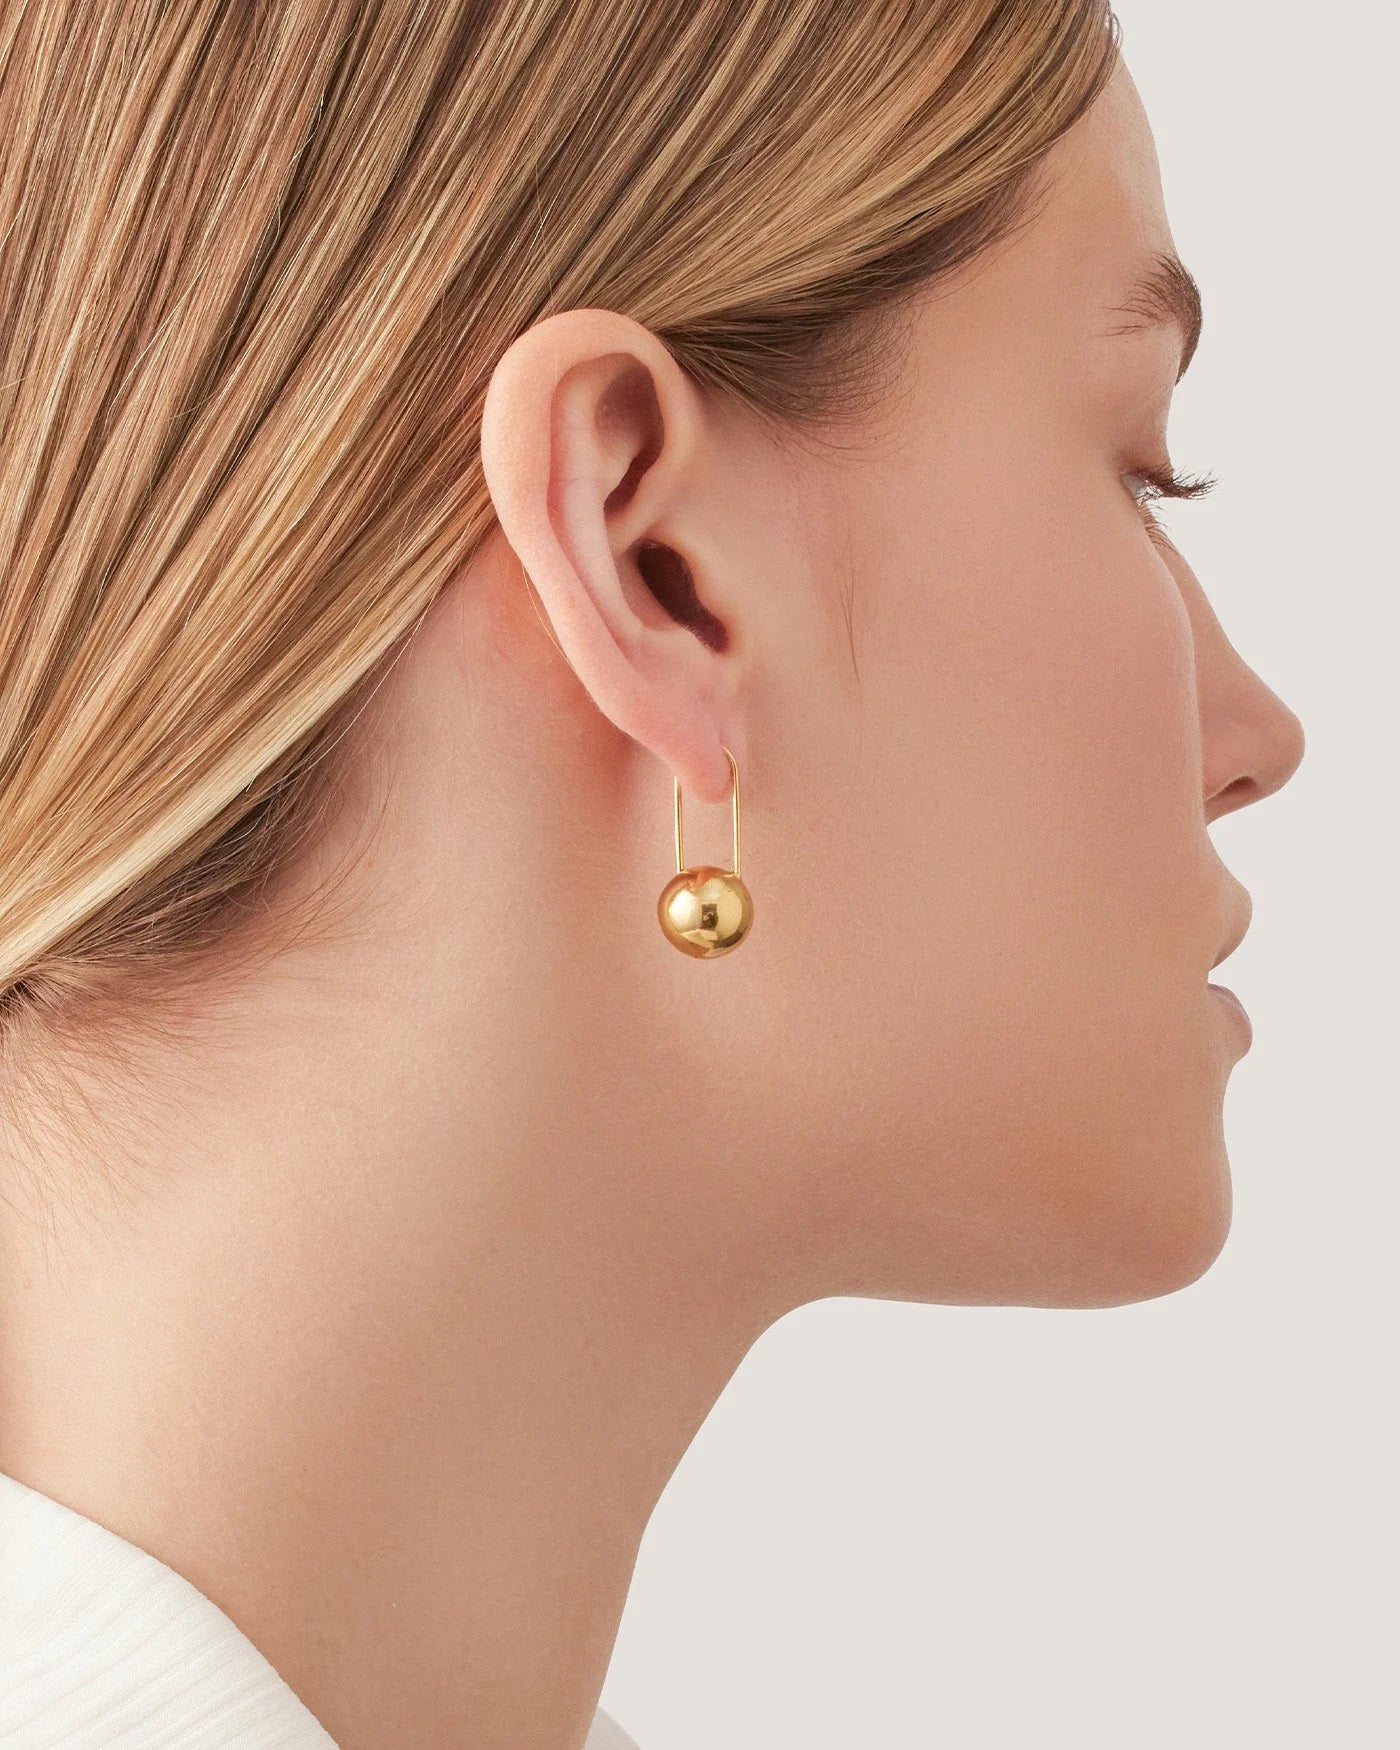 Celeste Earrings in Gold